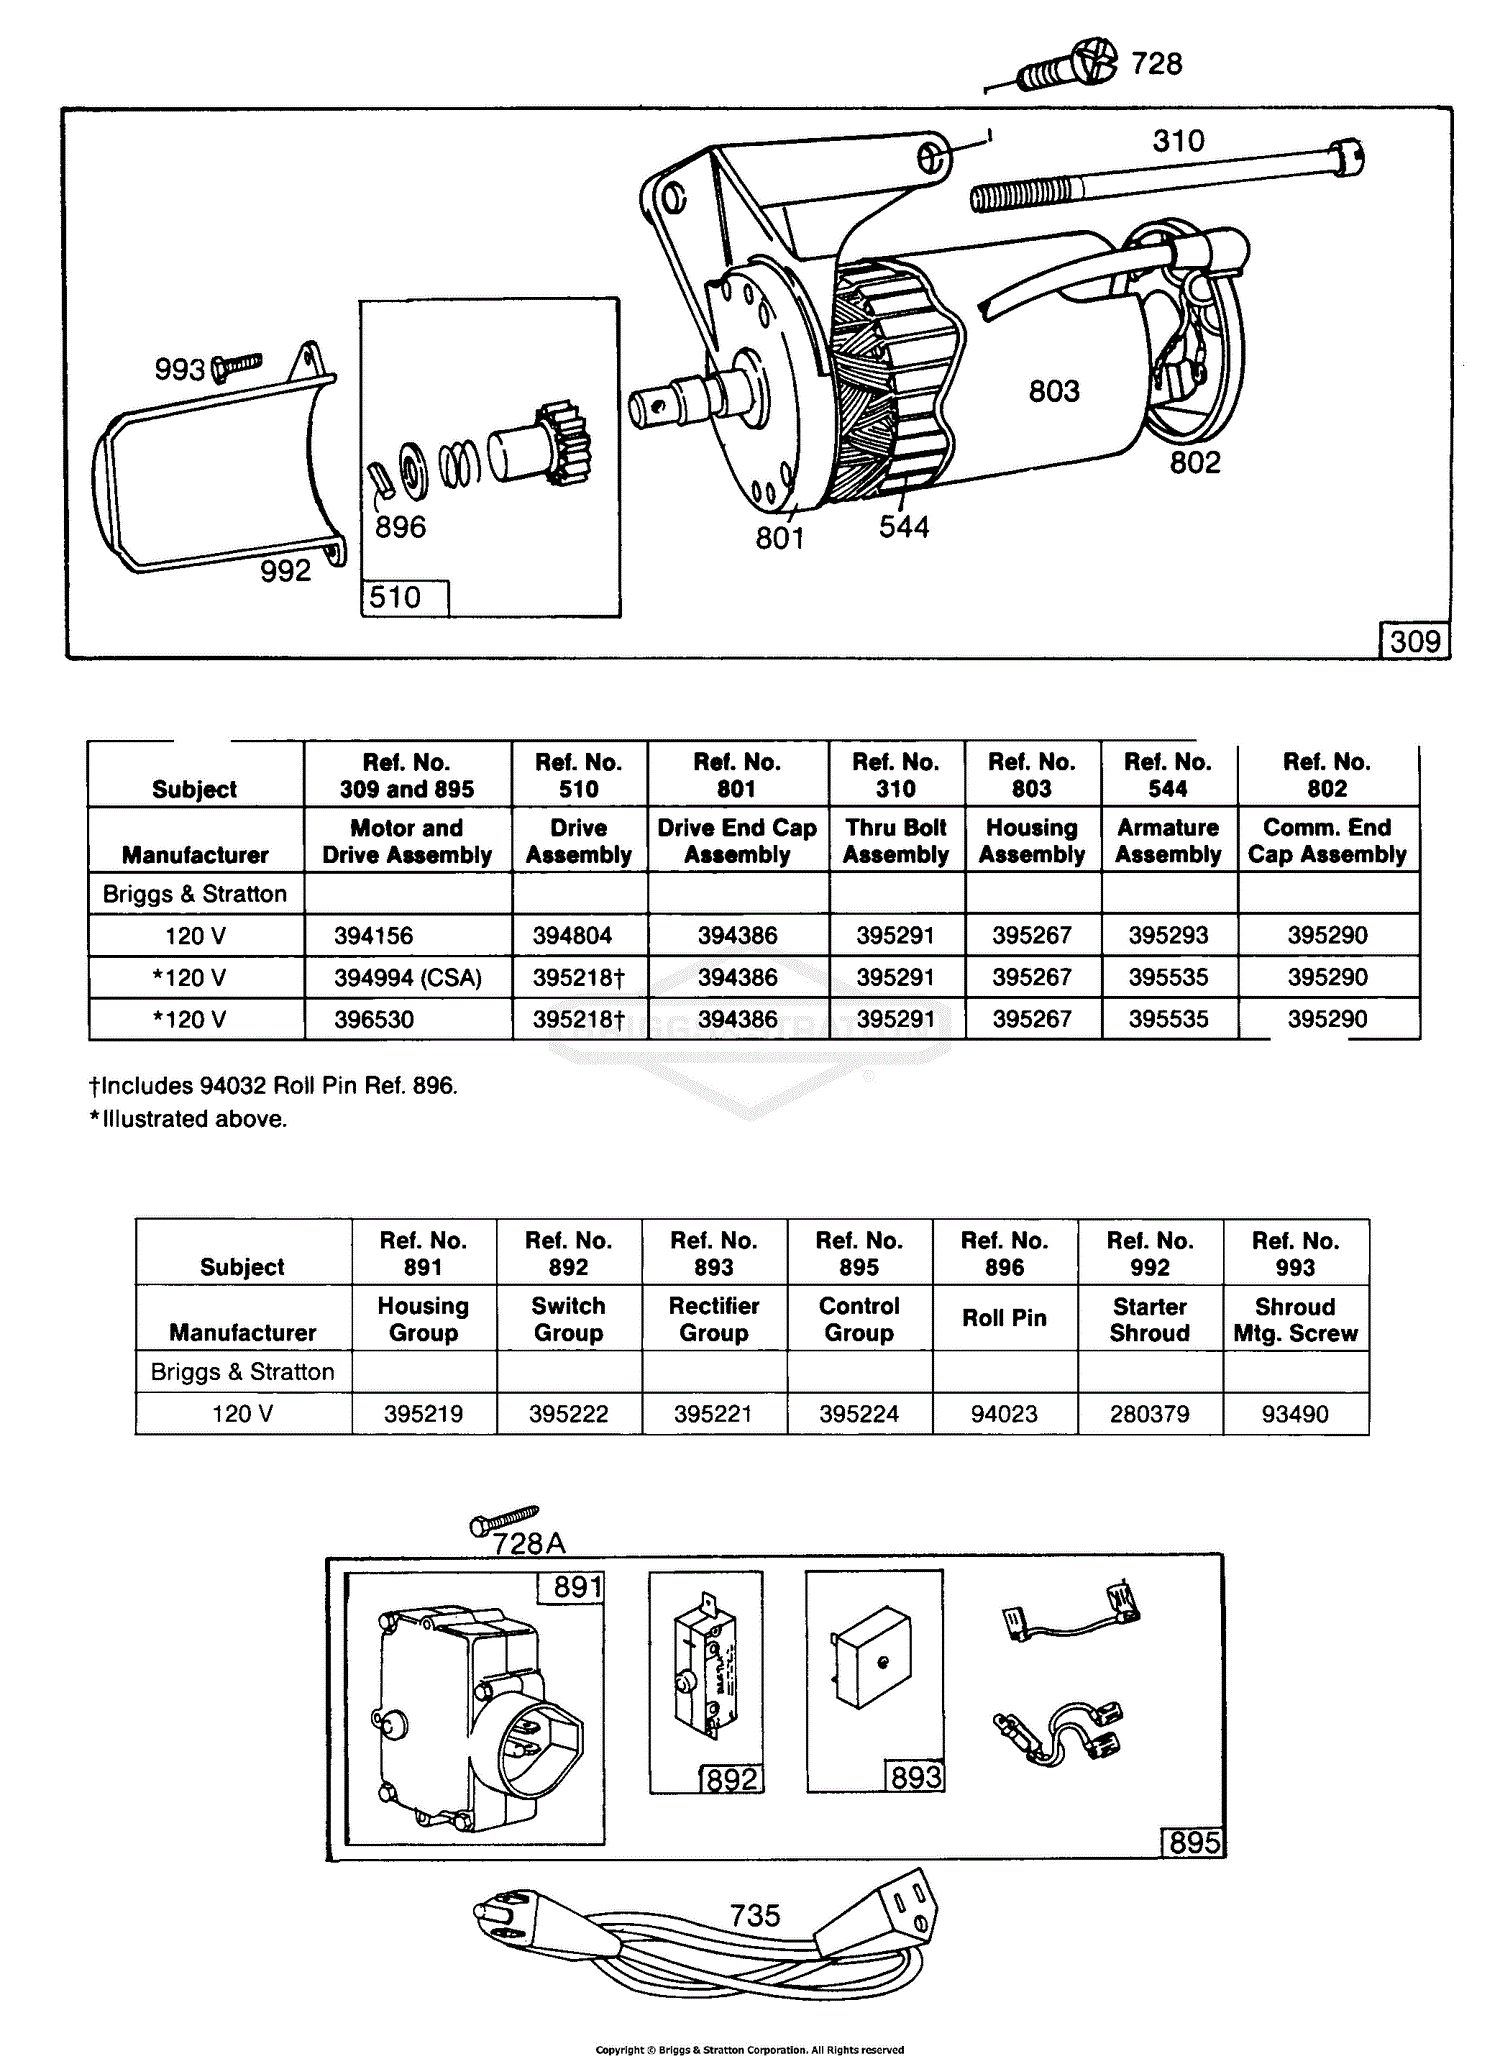 112212-0837-01 - Briggs & Stratton Horizontal Engine Parts Lookup